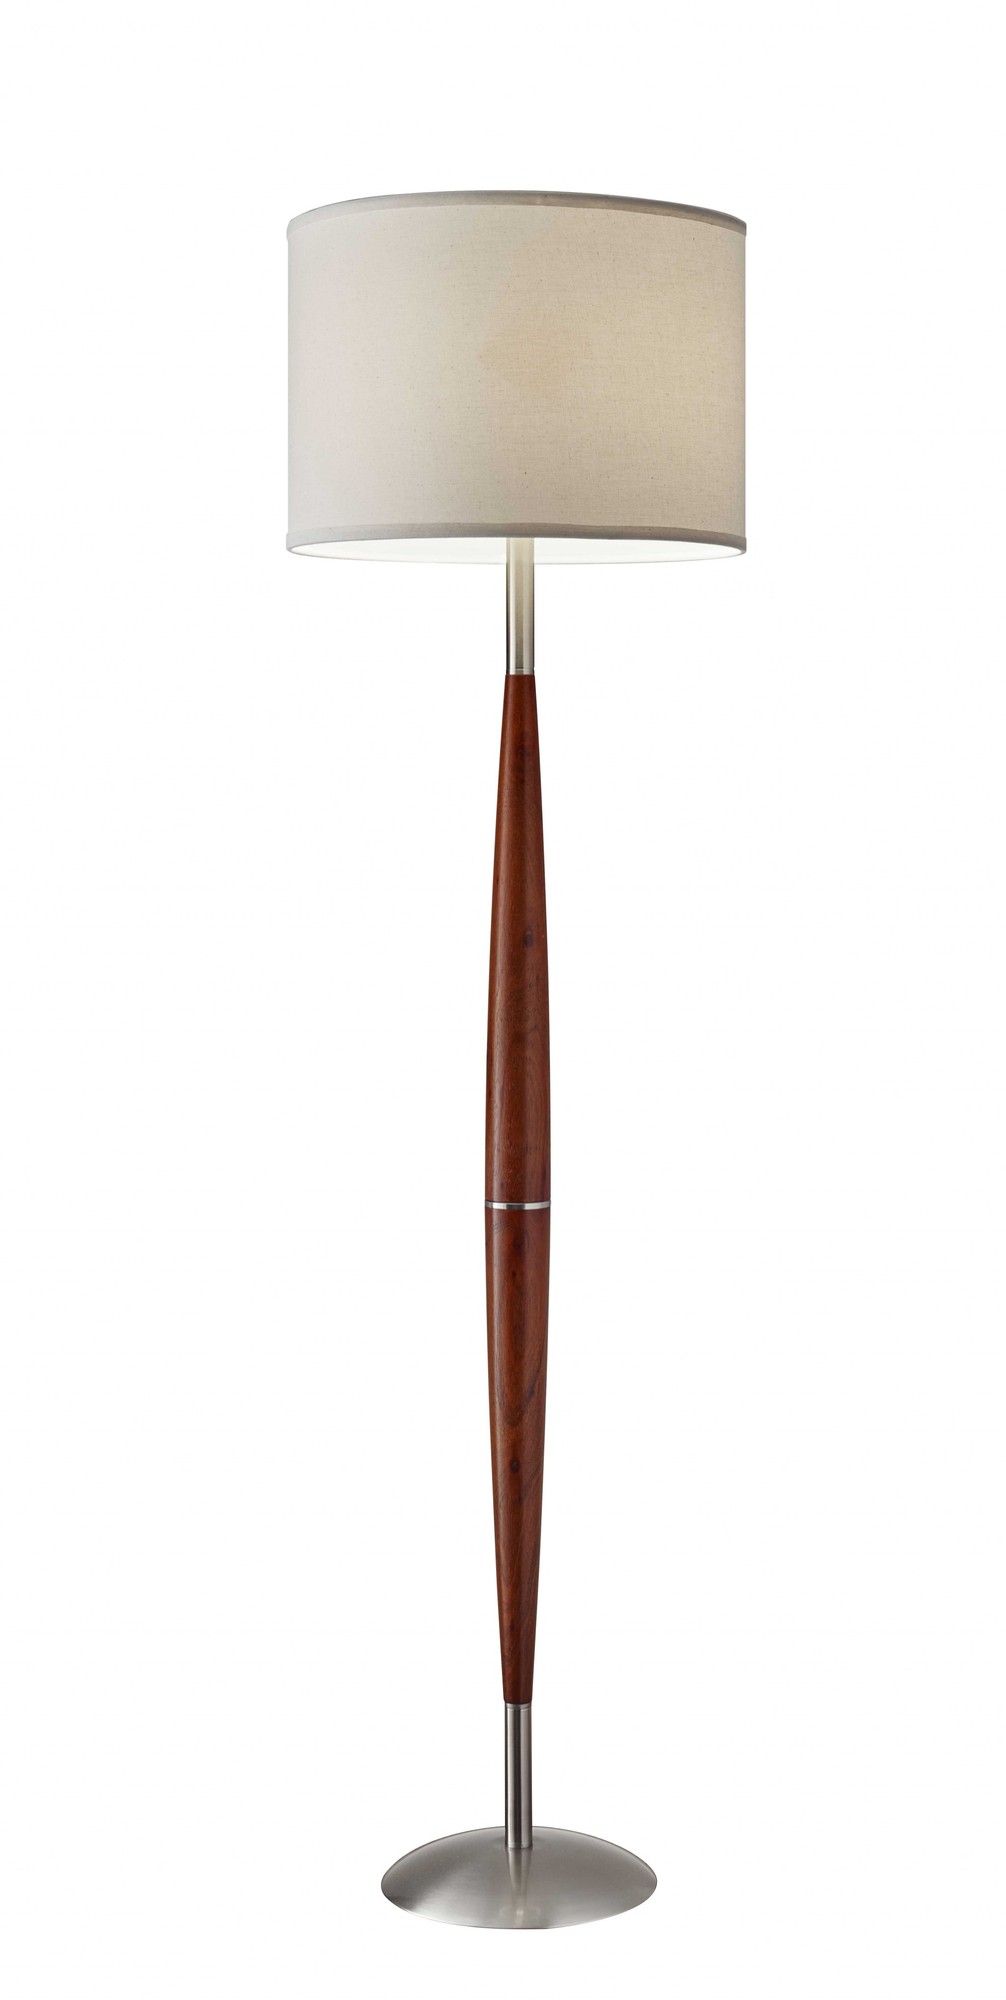 16" X 10" X 61" Walnut Wood Floor Lamp